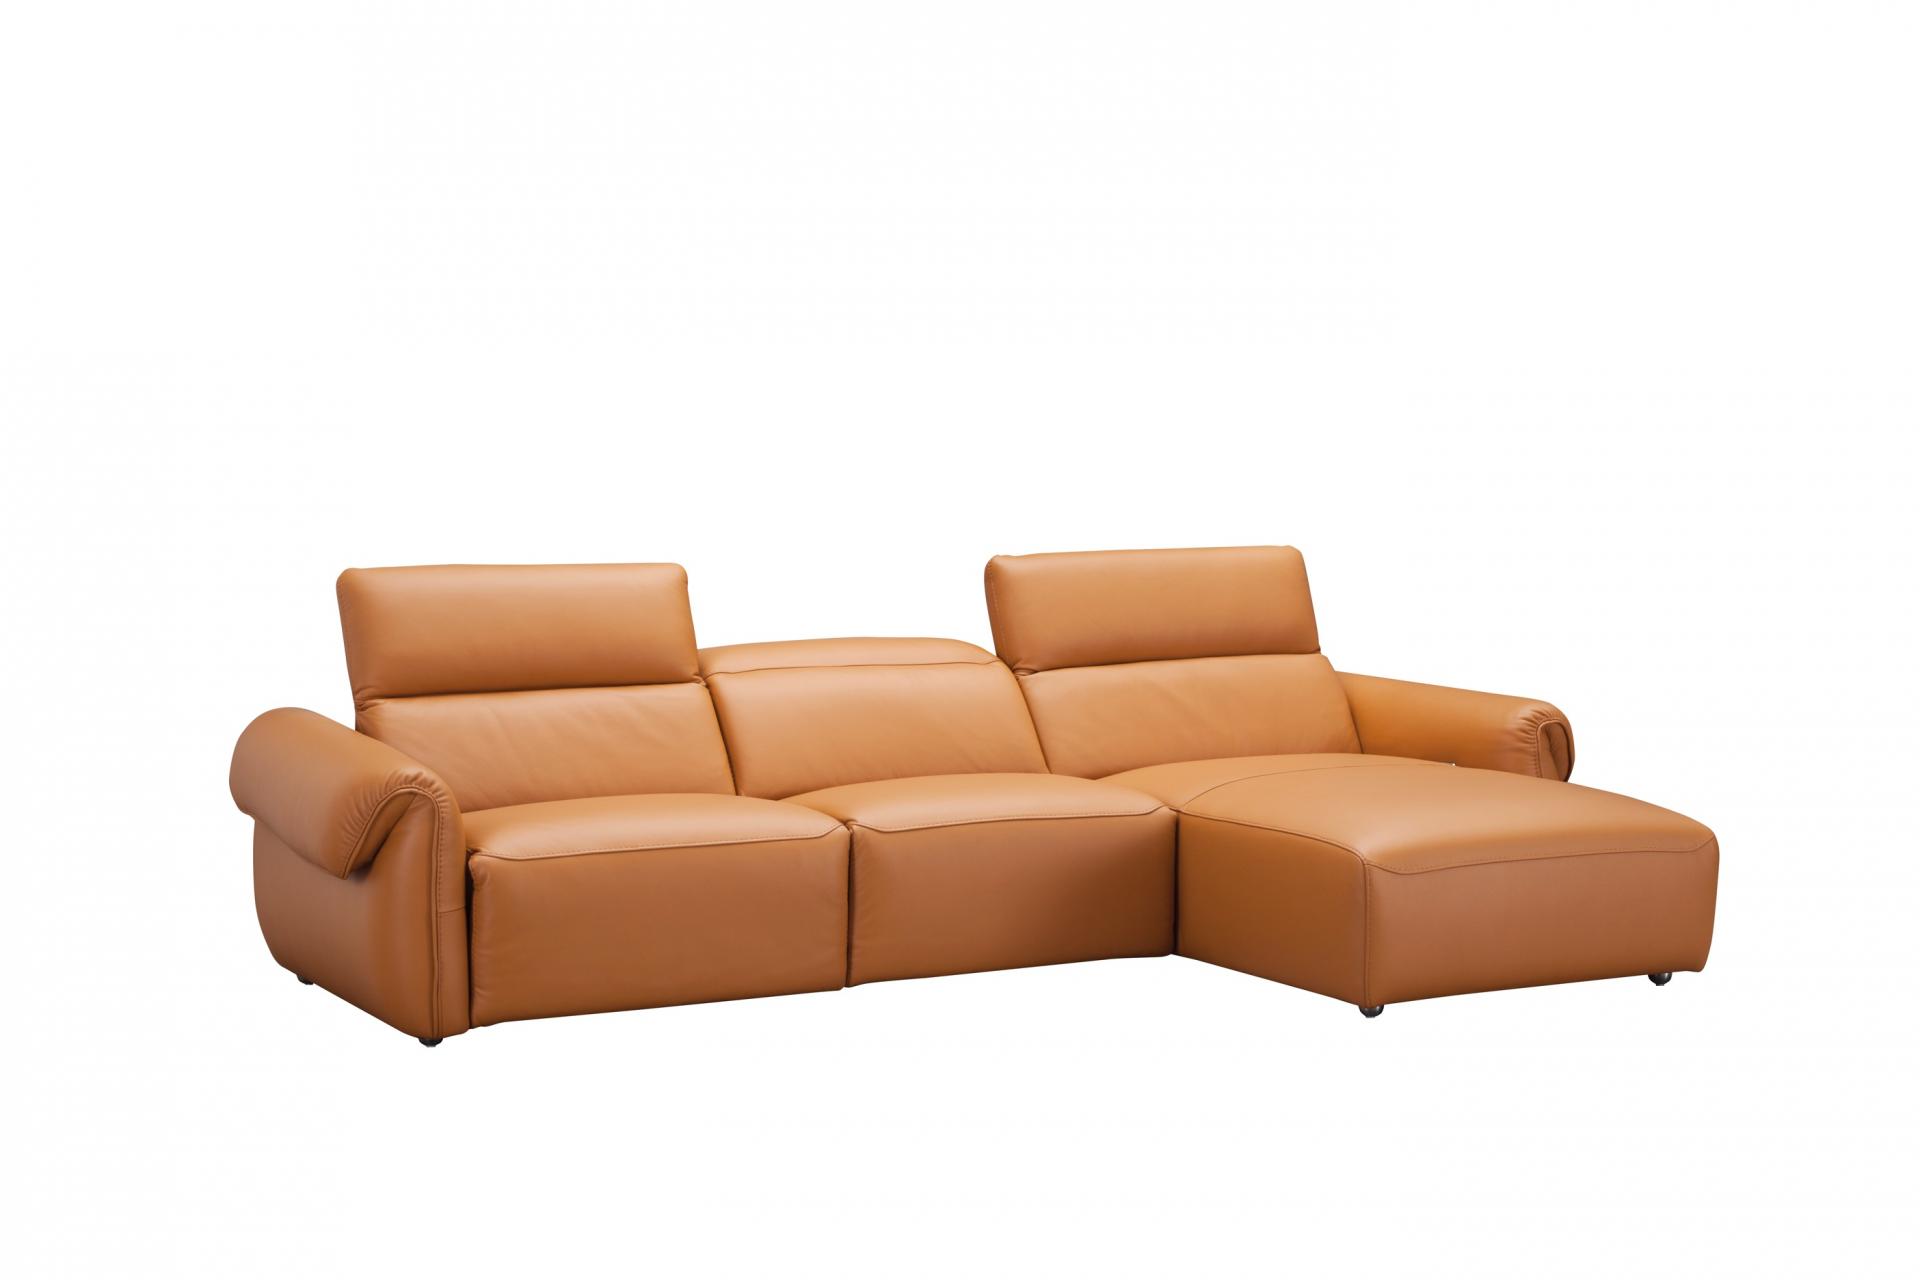 Sit pretty in MORRIS' new electric sofa series